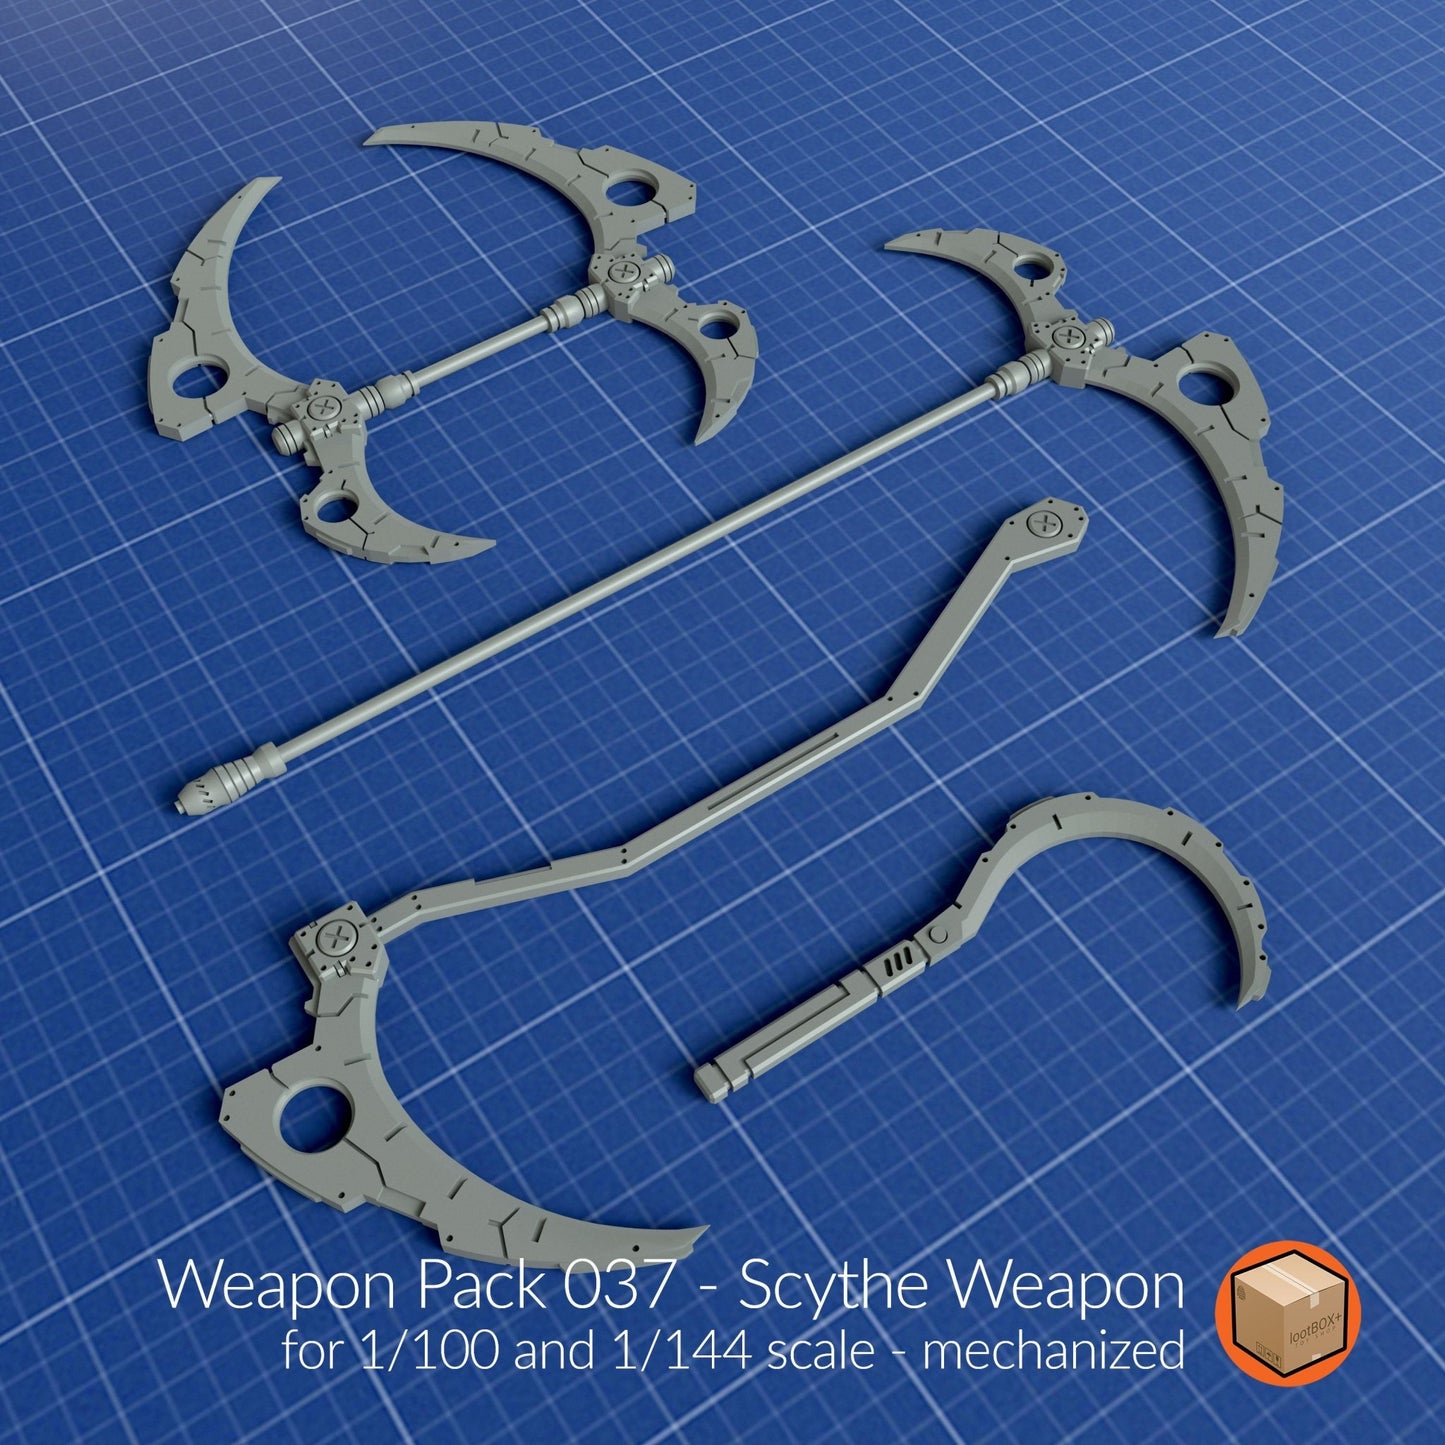 WP037 - Scythe Weapon - Trisagion Models